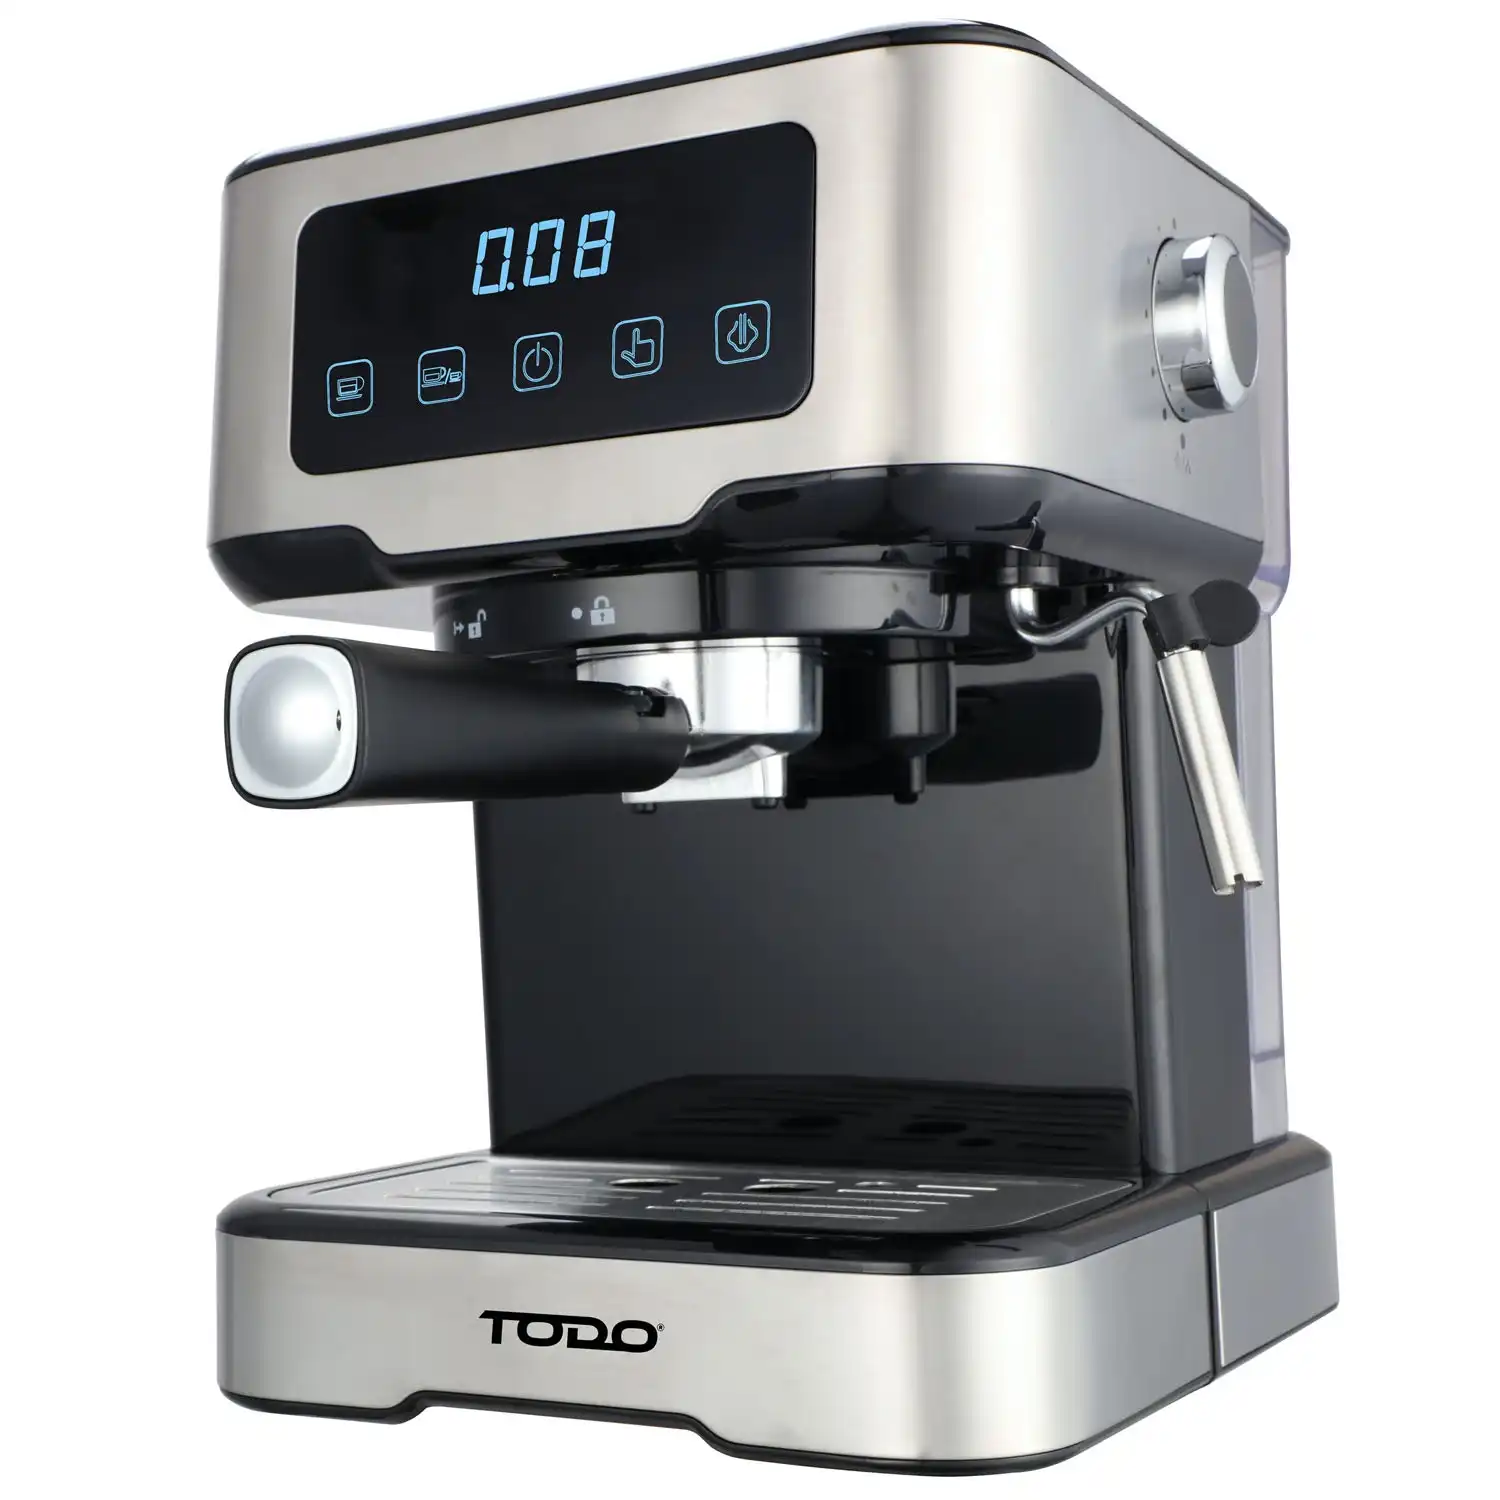 TODO Espresso Coffee Machine Maker Automatic Touch Control LED Display 15 Bar Pump 1.5L